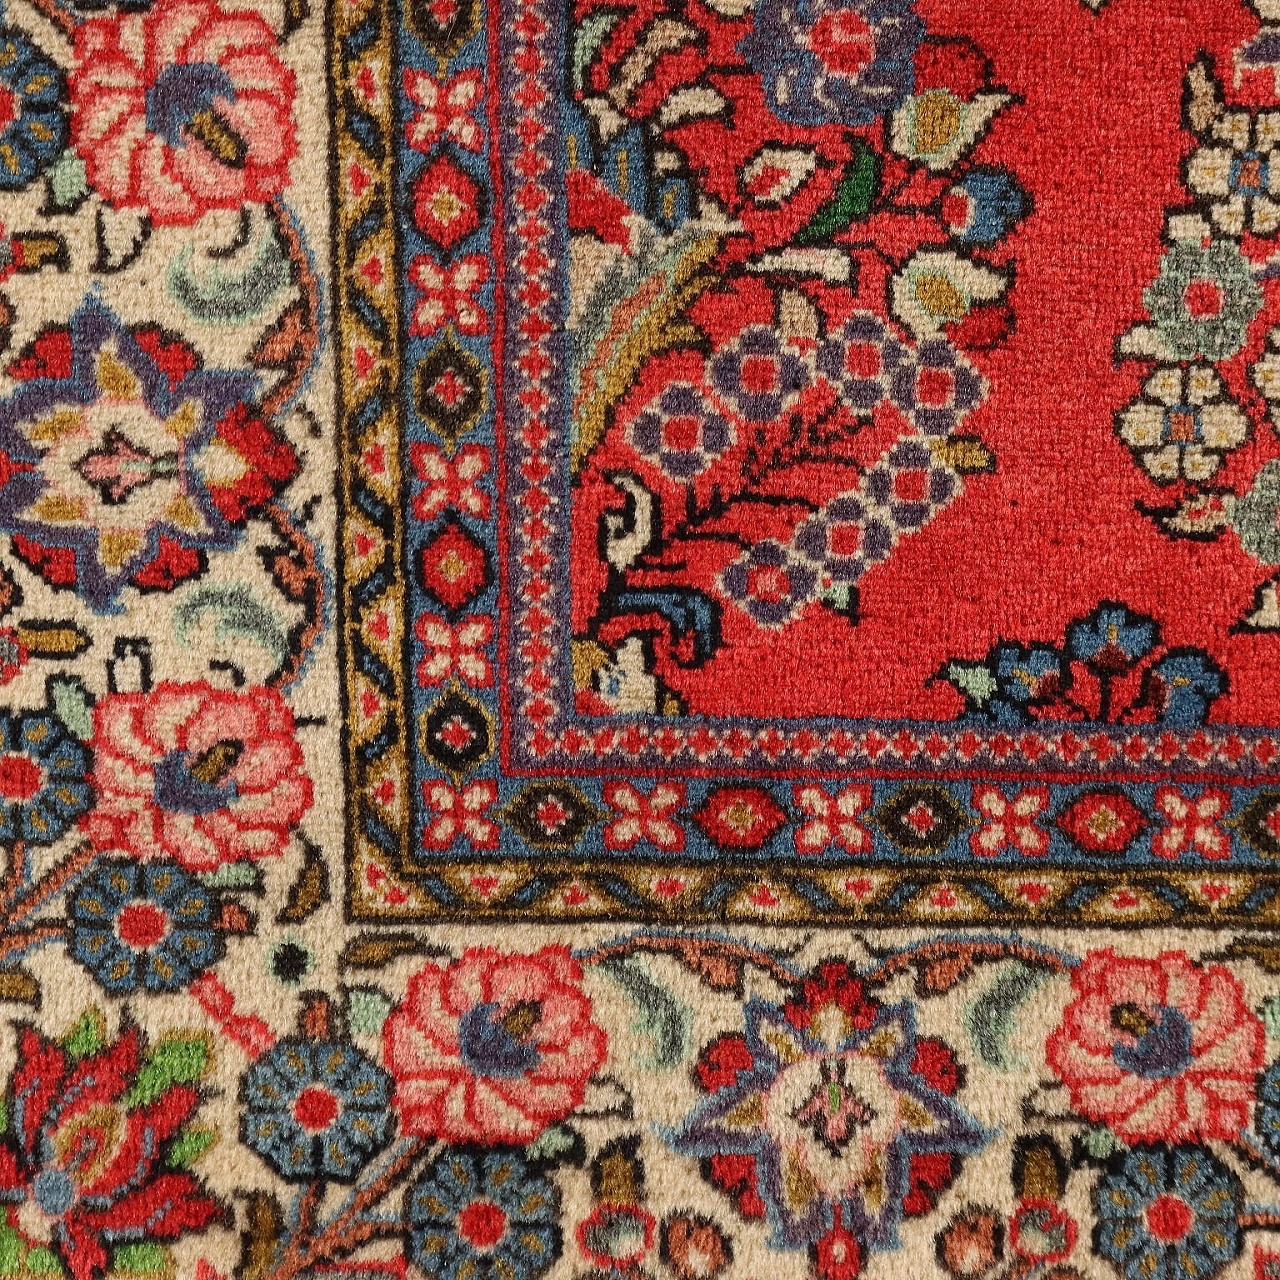 Iranian cotton and wool Saruk rug 6